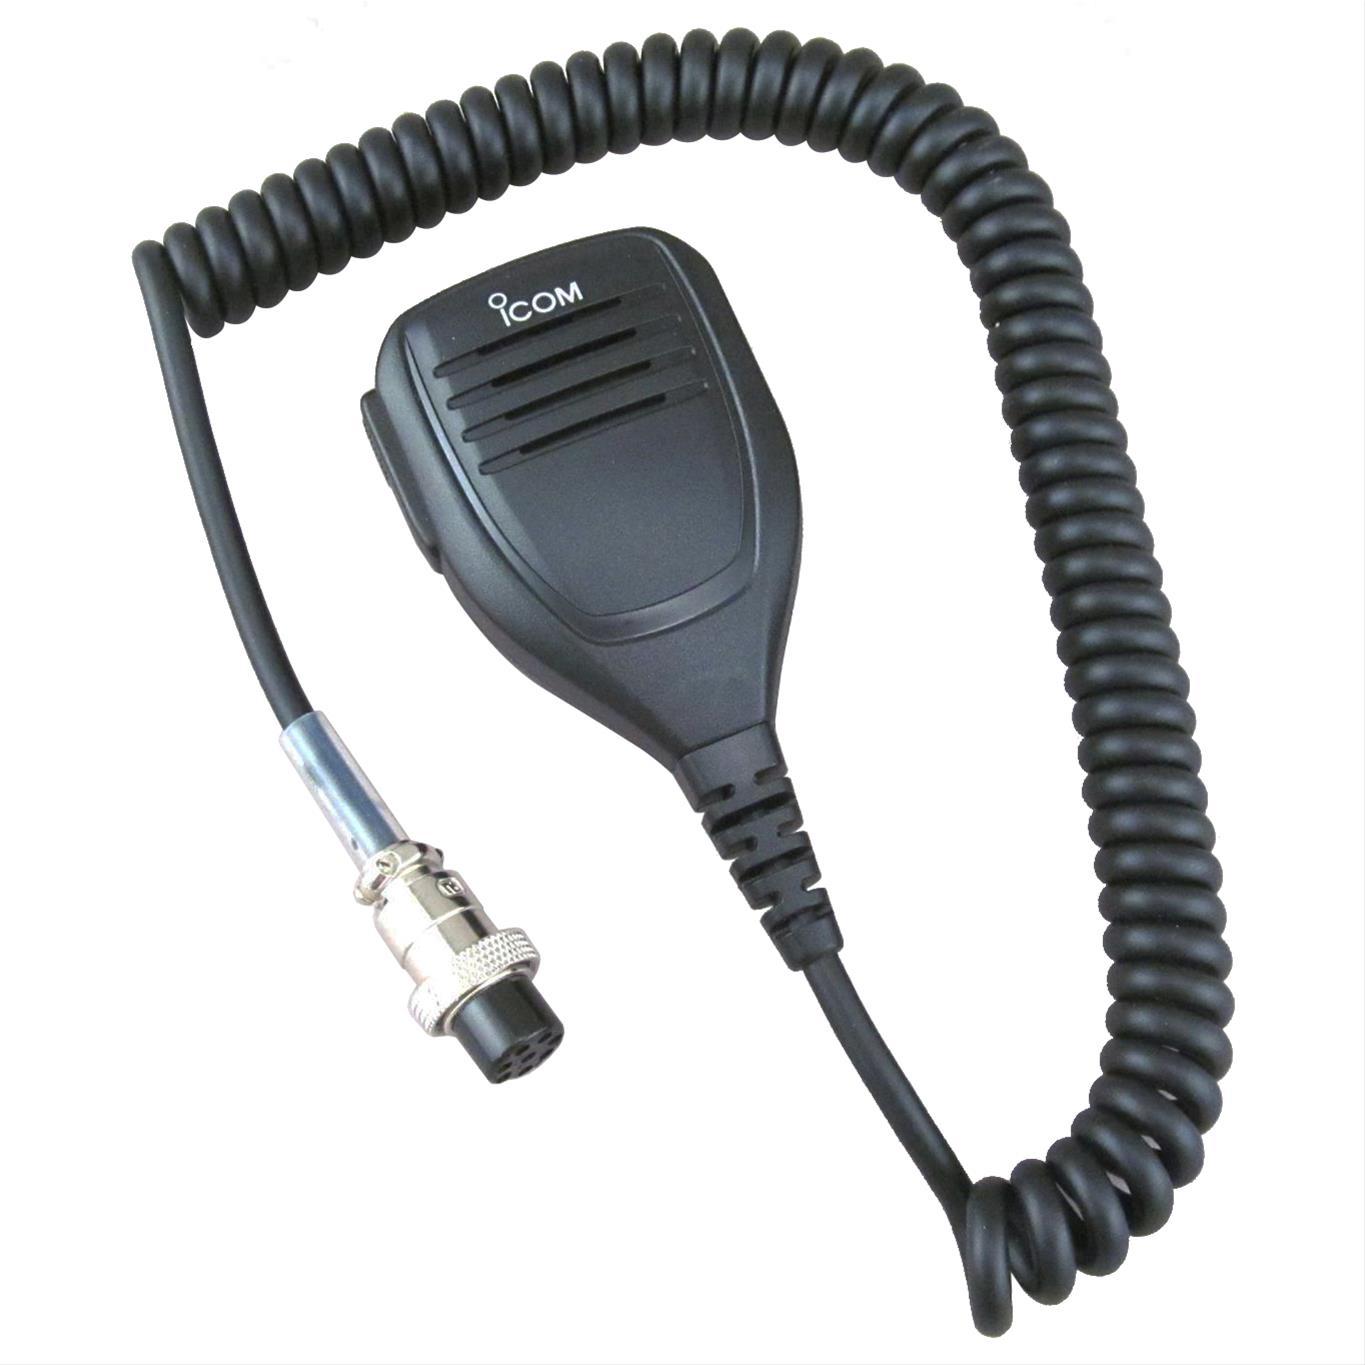 Icom HM-219 Hand Microphone for IC-7300